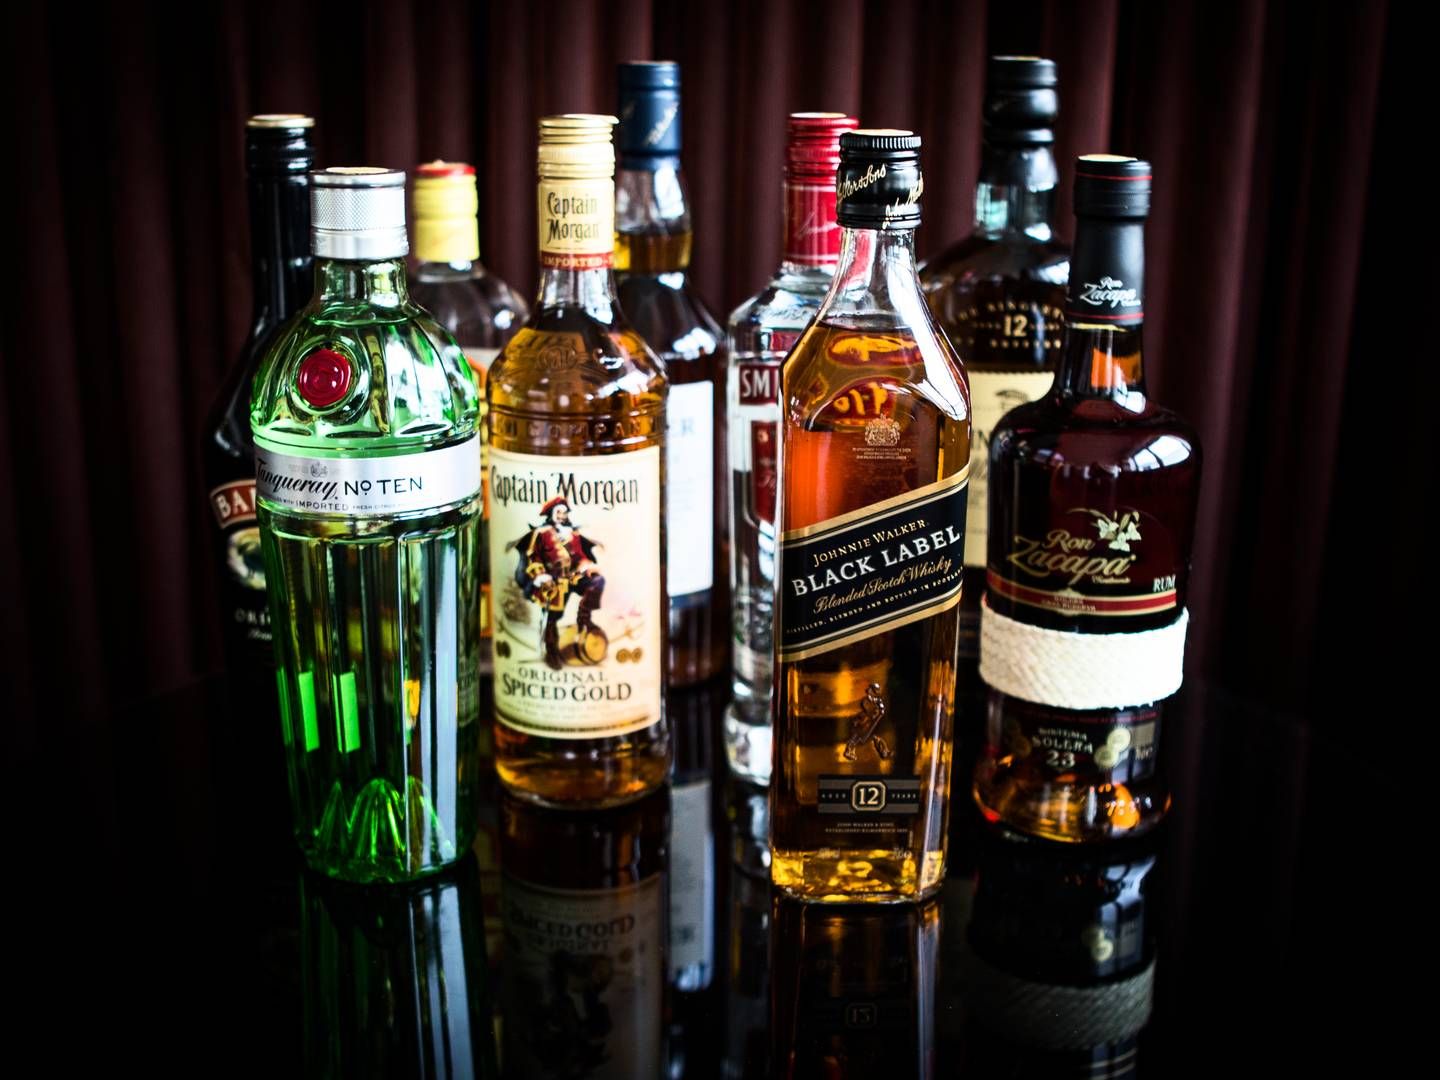 Verdens største spiritusproducent, britiske Diageo, har bl.a. Captain Morgan, Bailey's og Smirnoff vodka i dets portefølje. | Foto: Sofia Busk